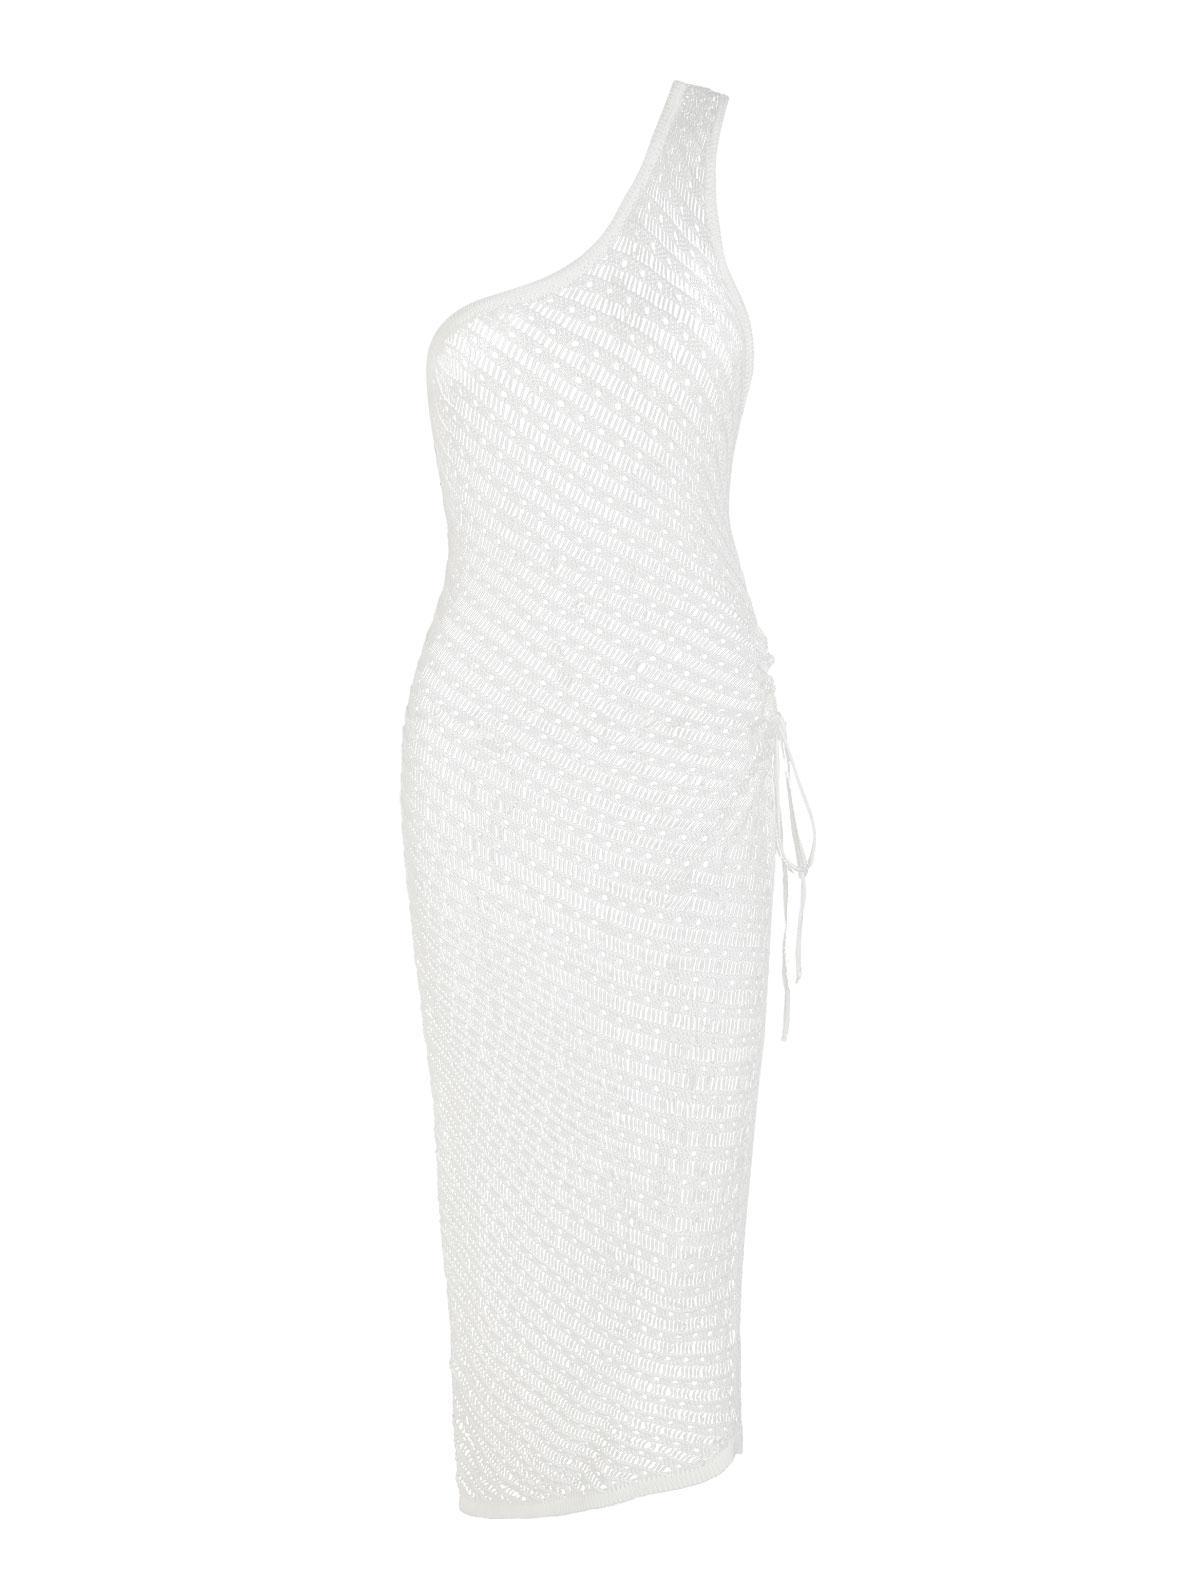 Zaful Cinched Side One Shoulder Crochet Knit Beach Dress in White | Lyst